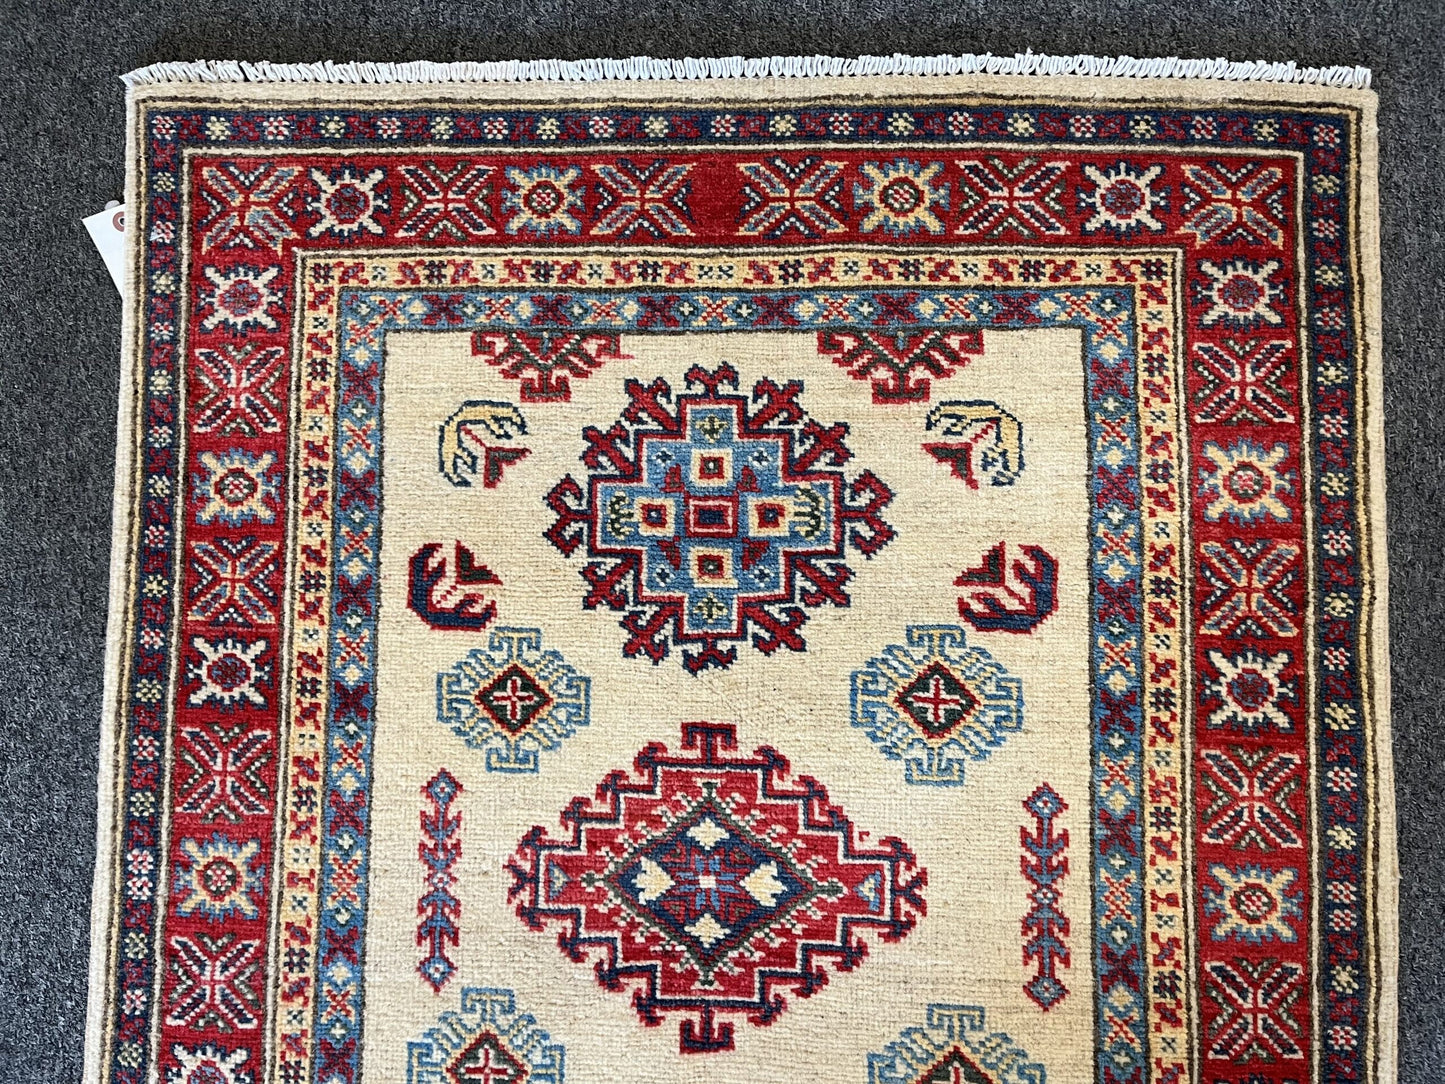 3' X 4' Kazak Handmade Wool Rug # 12720